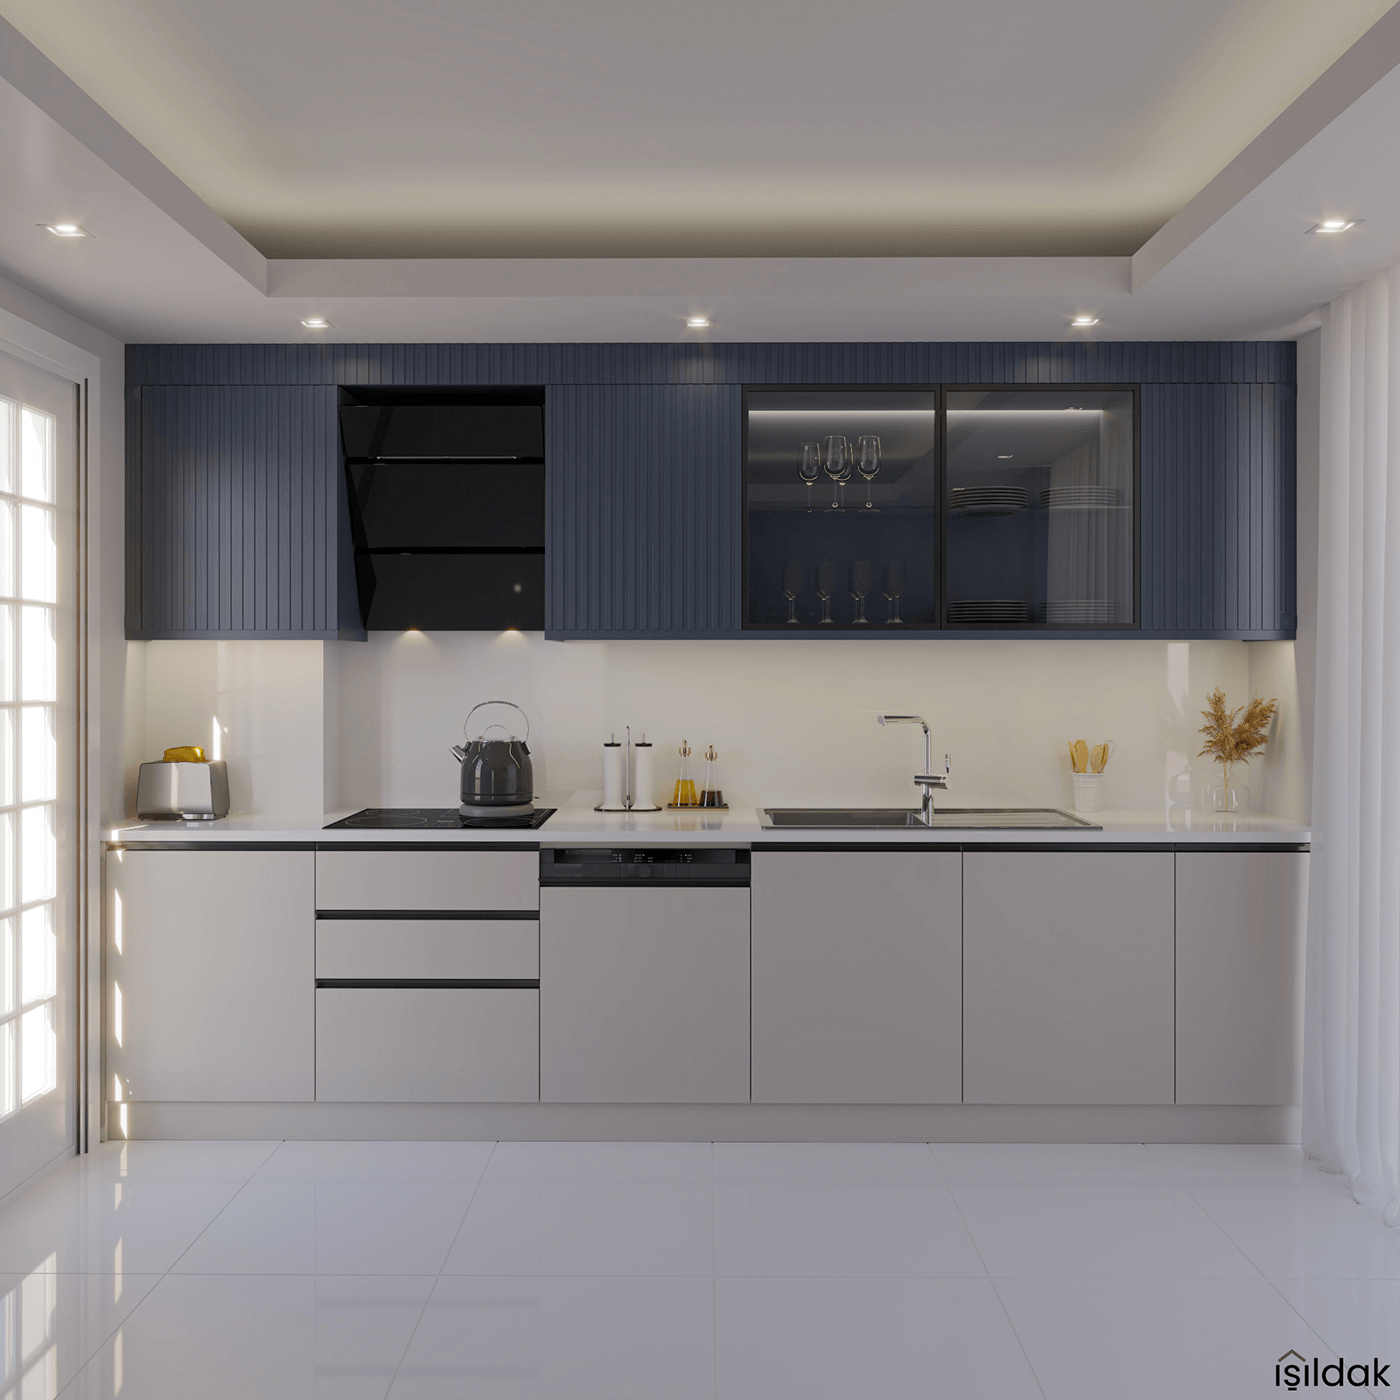 cabinet Interior architecture Render interior design  vray kitchen kitchendesign interiordesign house